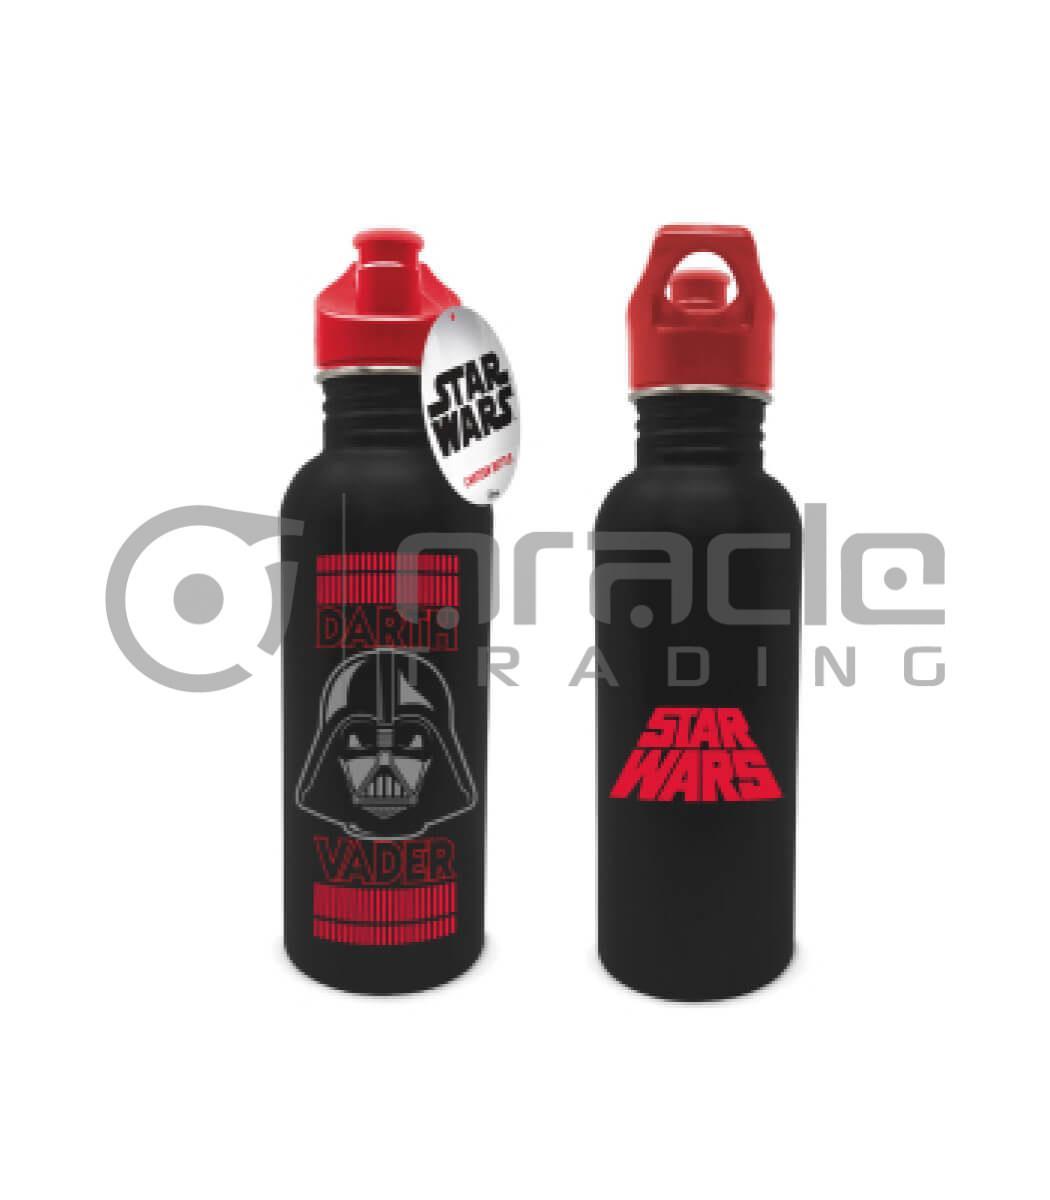 Star Wars Canteen Bottle - Darth Vader